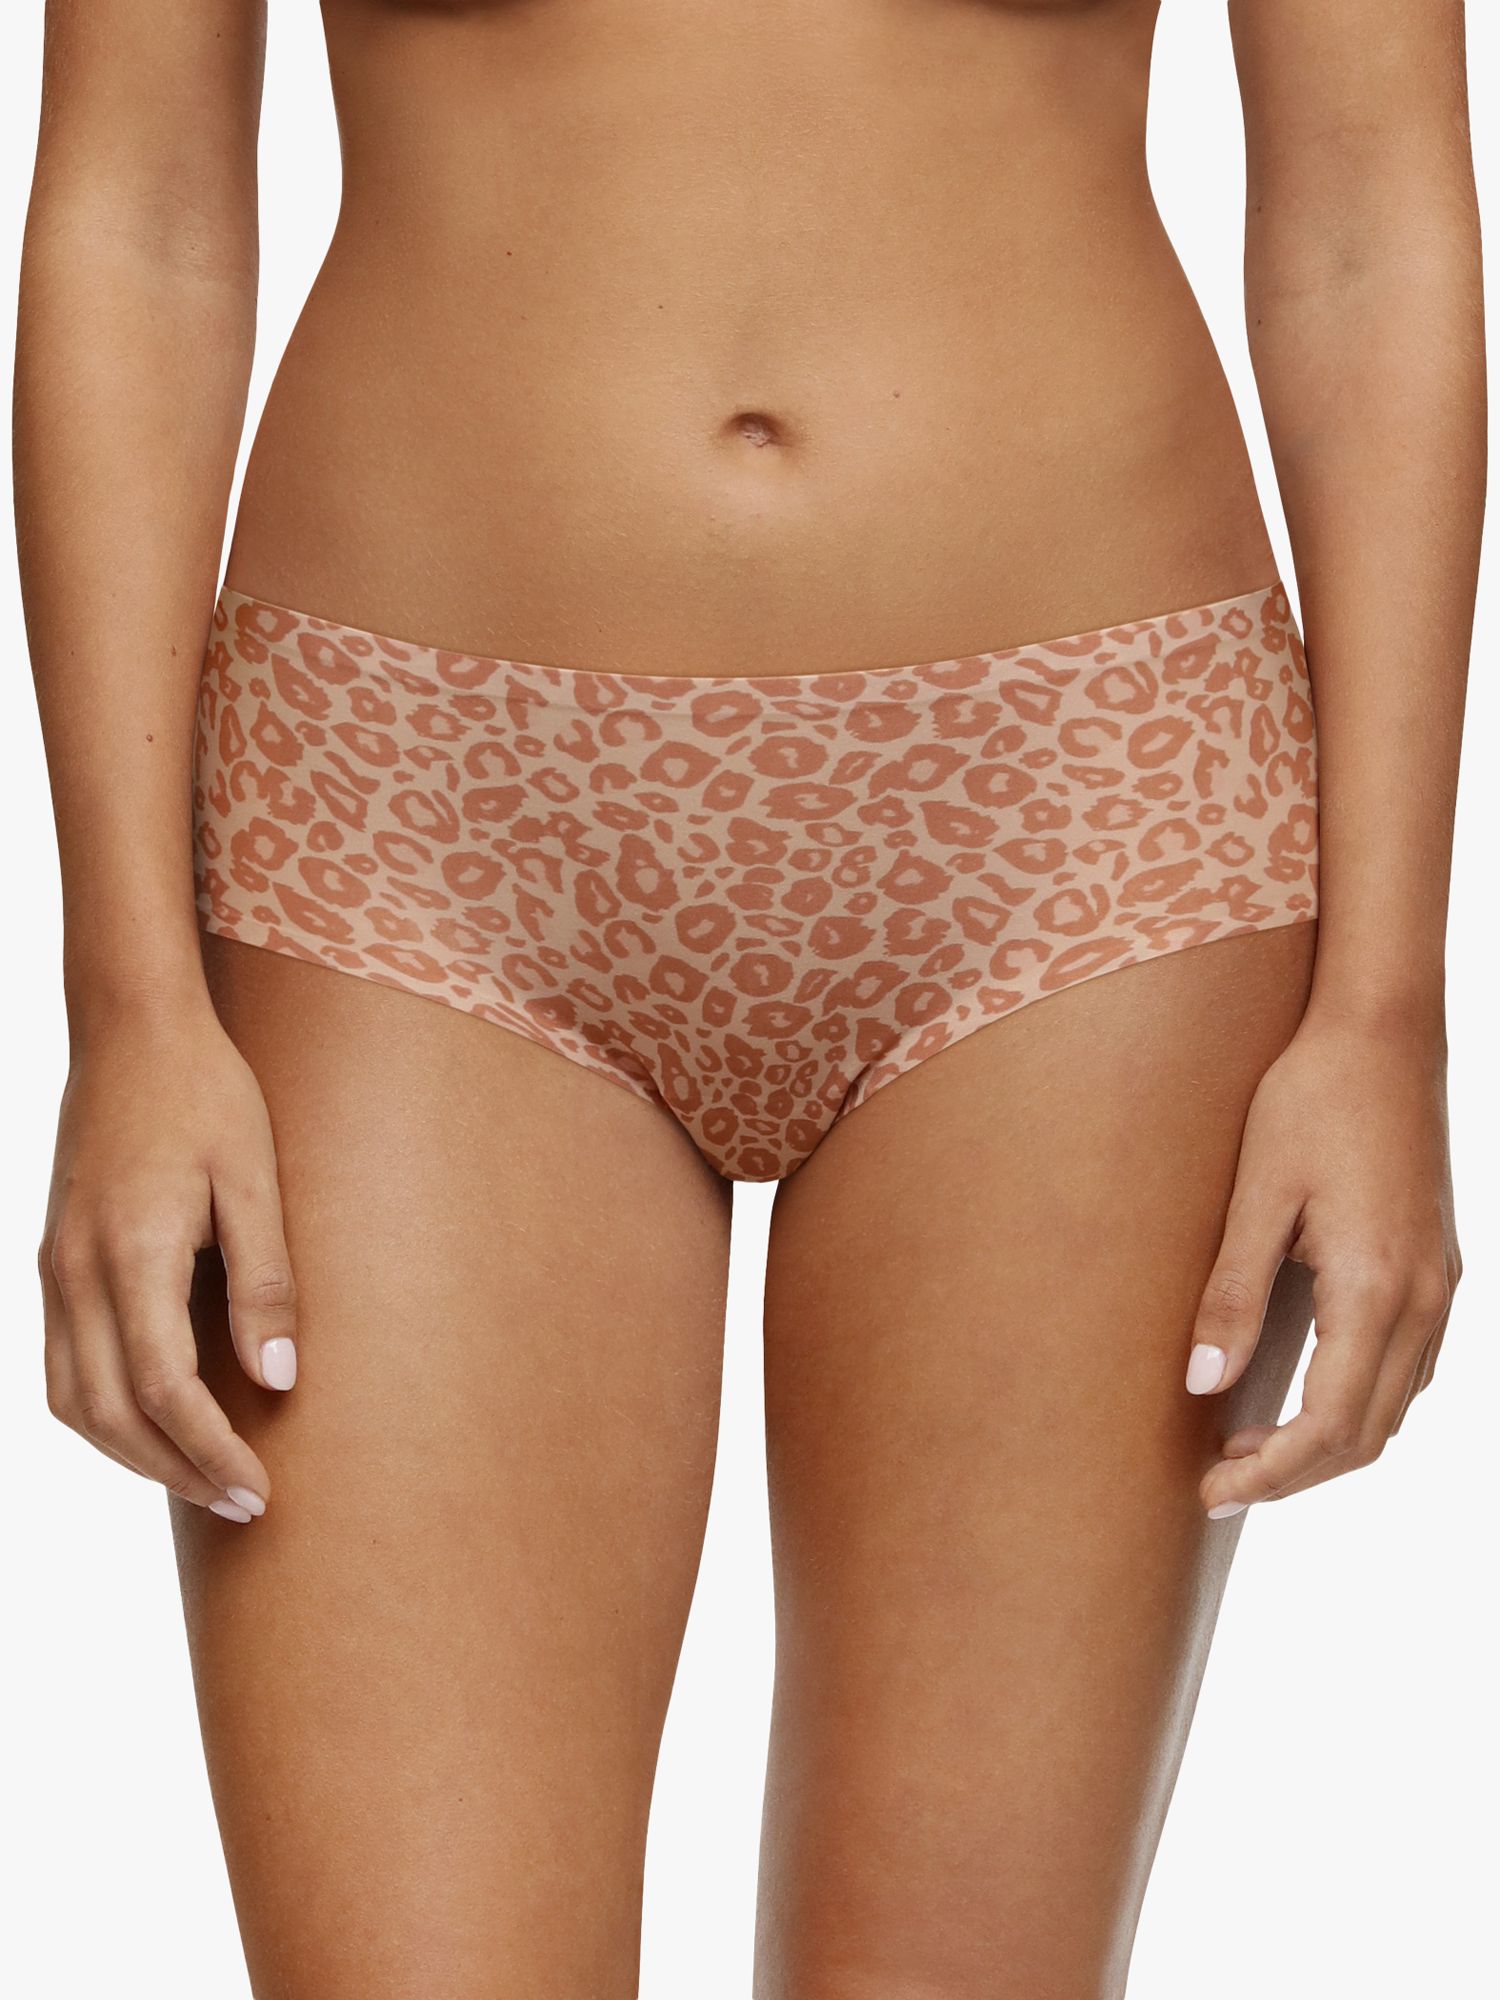 Blush Lingerie Hipster Panties - Leopard on Sale